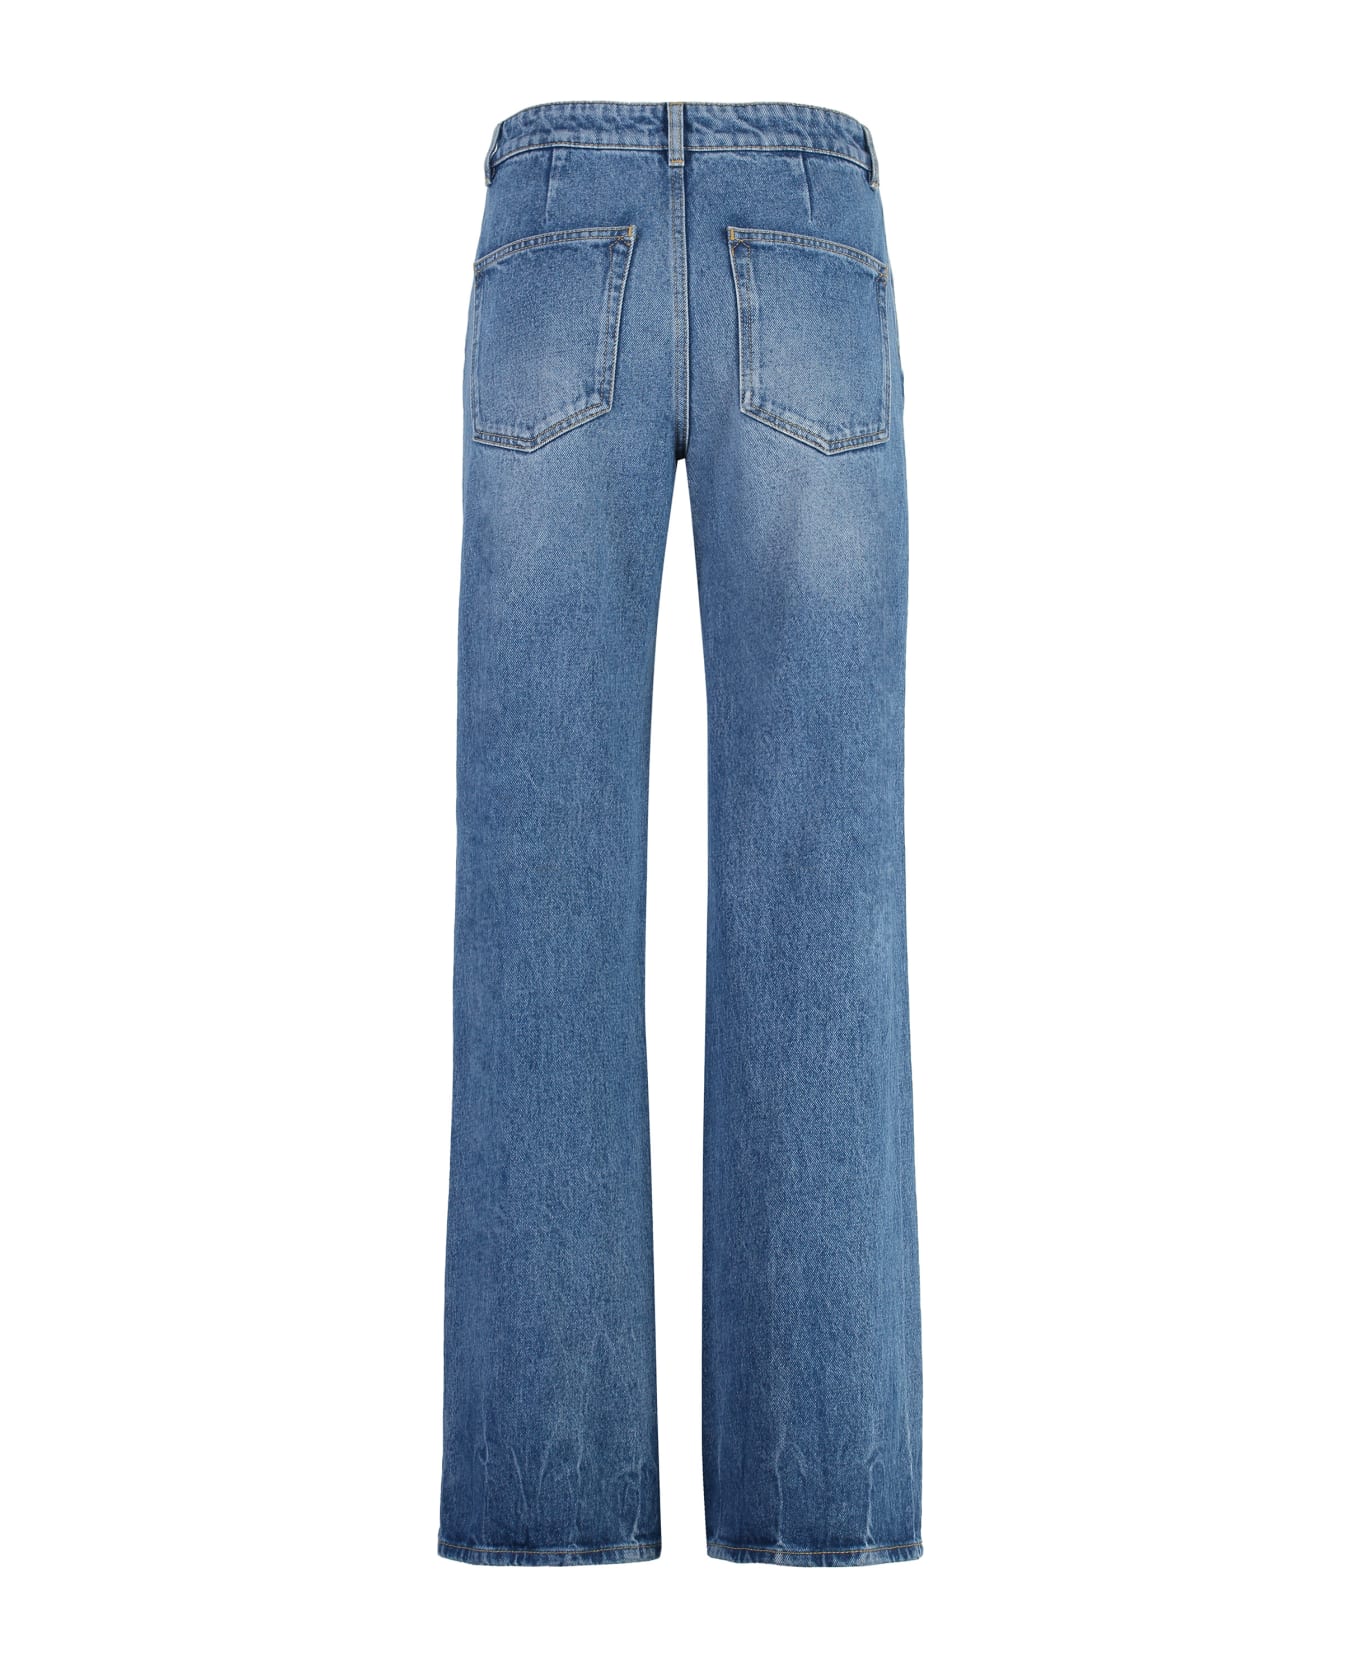 Paco Rabanne 5-pocket Straight-leg Jeans - Denim